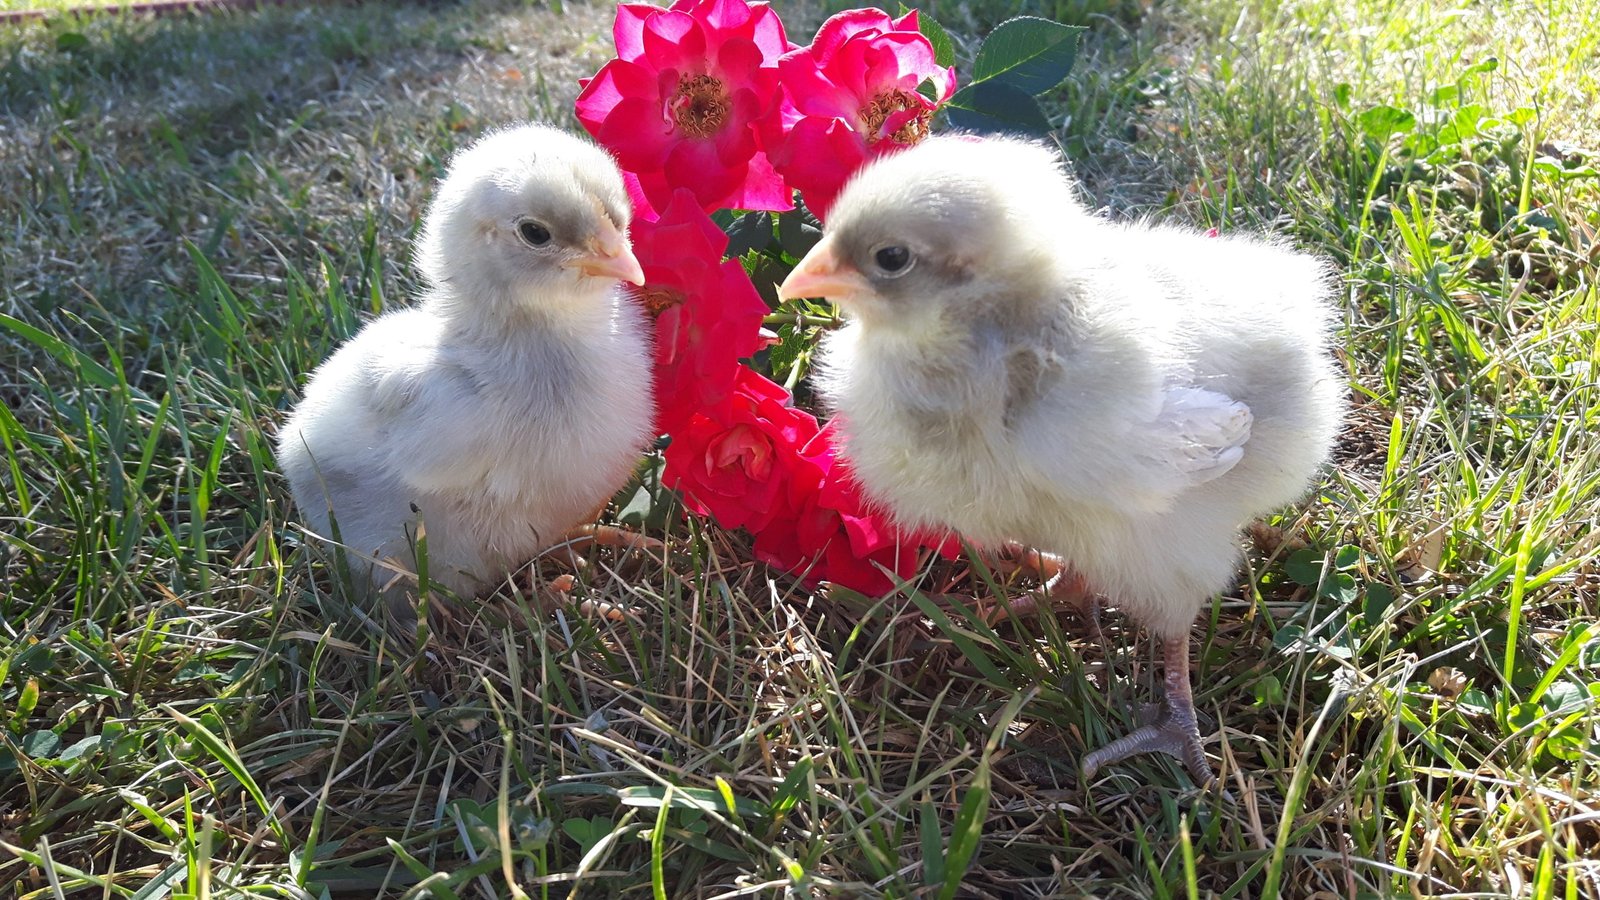 Orpington Chicks Pre-Order